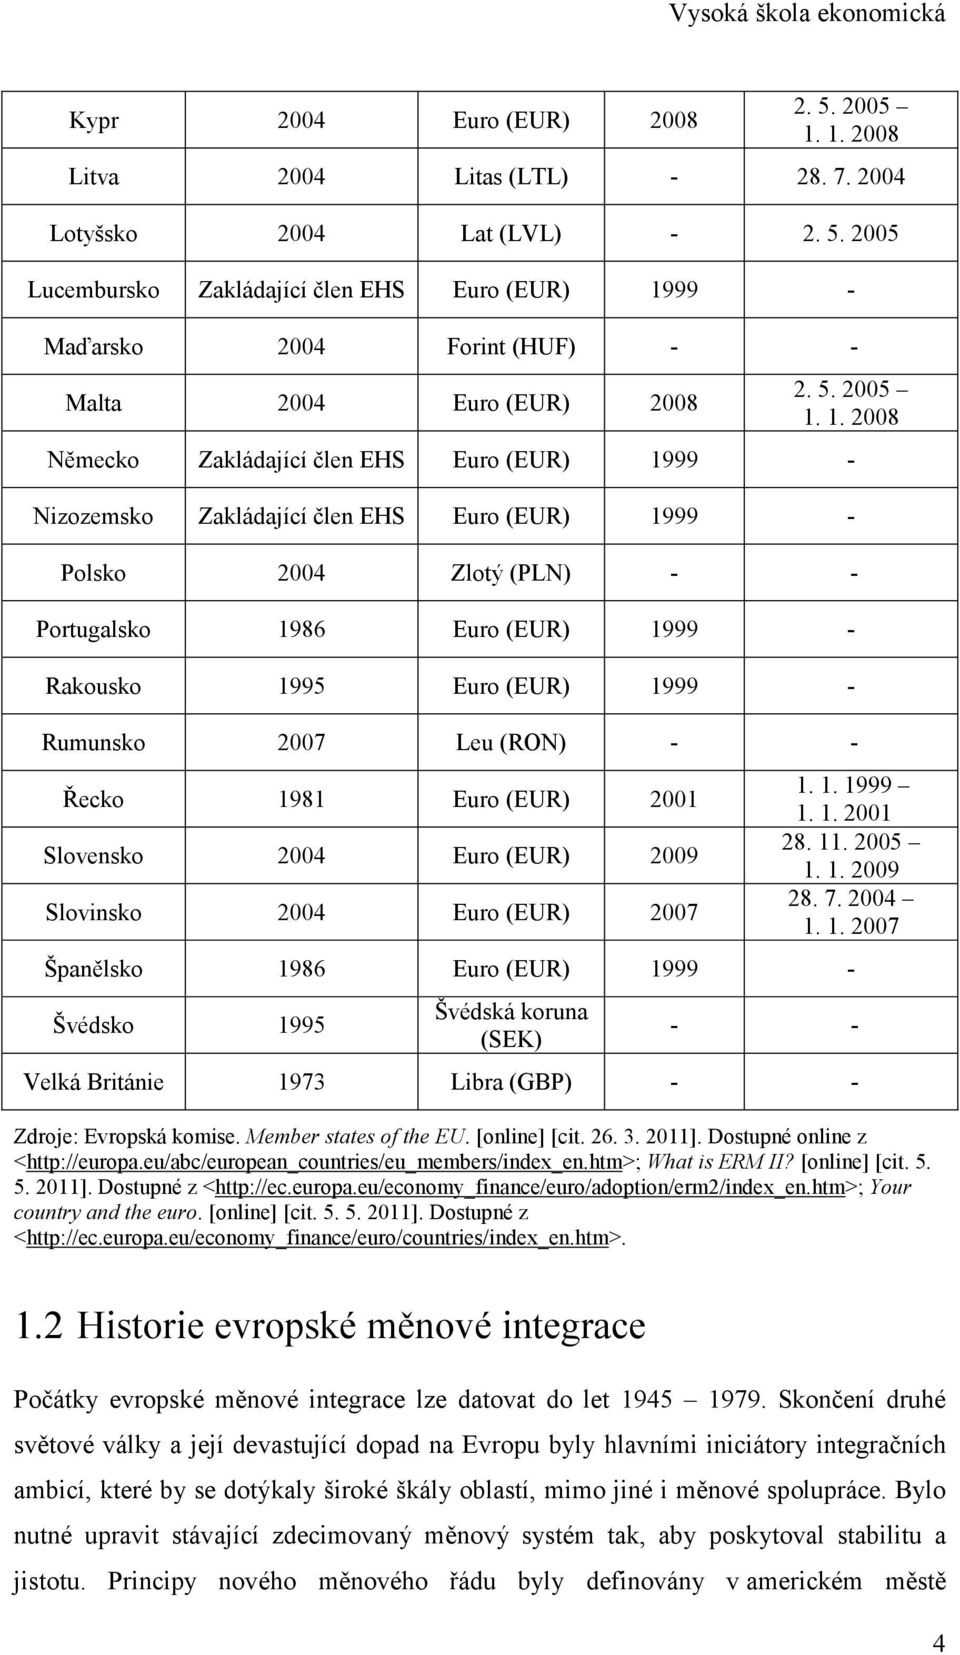 1. 2008 Německo Zakládající člen EHS Euro (EUR) 1999 - Nizozemsko Zakládající člen EHS Euro (EUR) 1999 - Polsko 2004 Zlotý (PLN) - - Portugalsko 1986 Euro (EUR) 1999 - Rakousko 1995 Euro (EUR) 1999 -